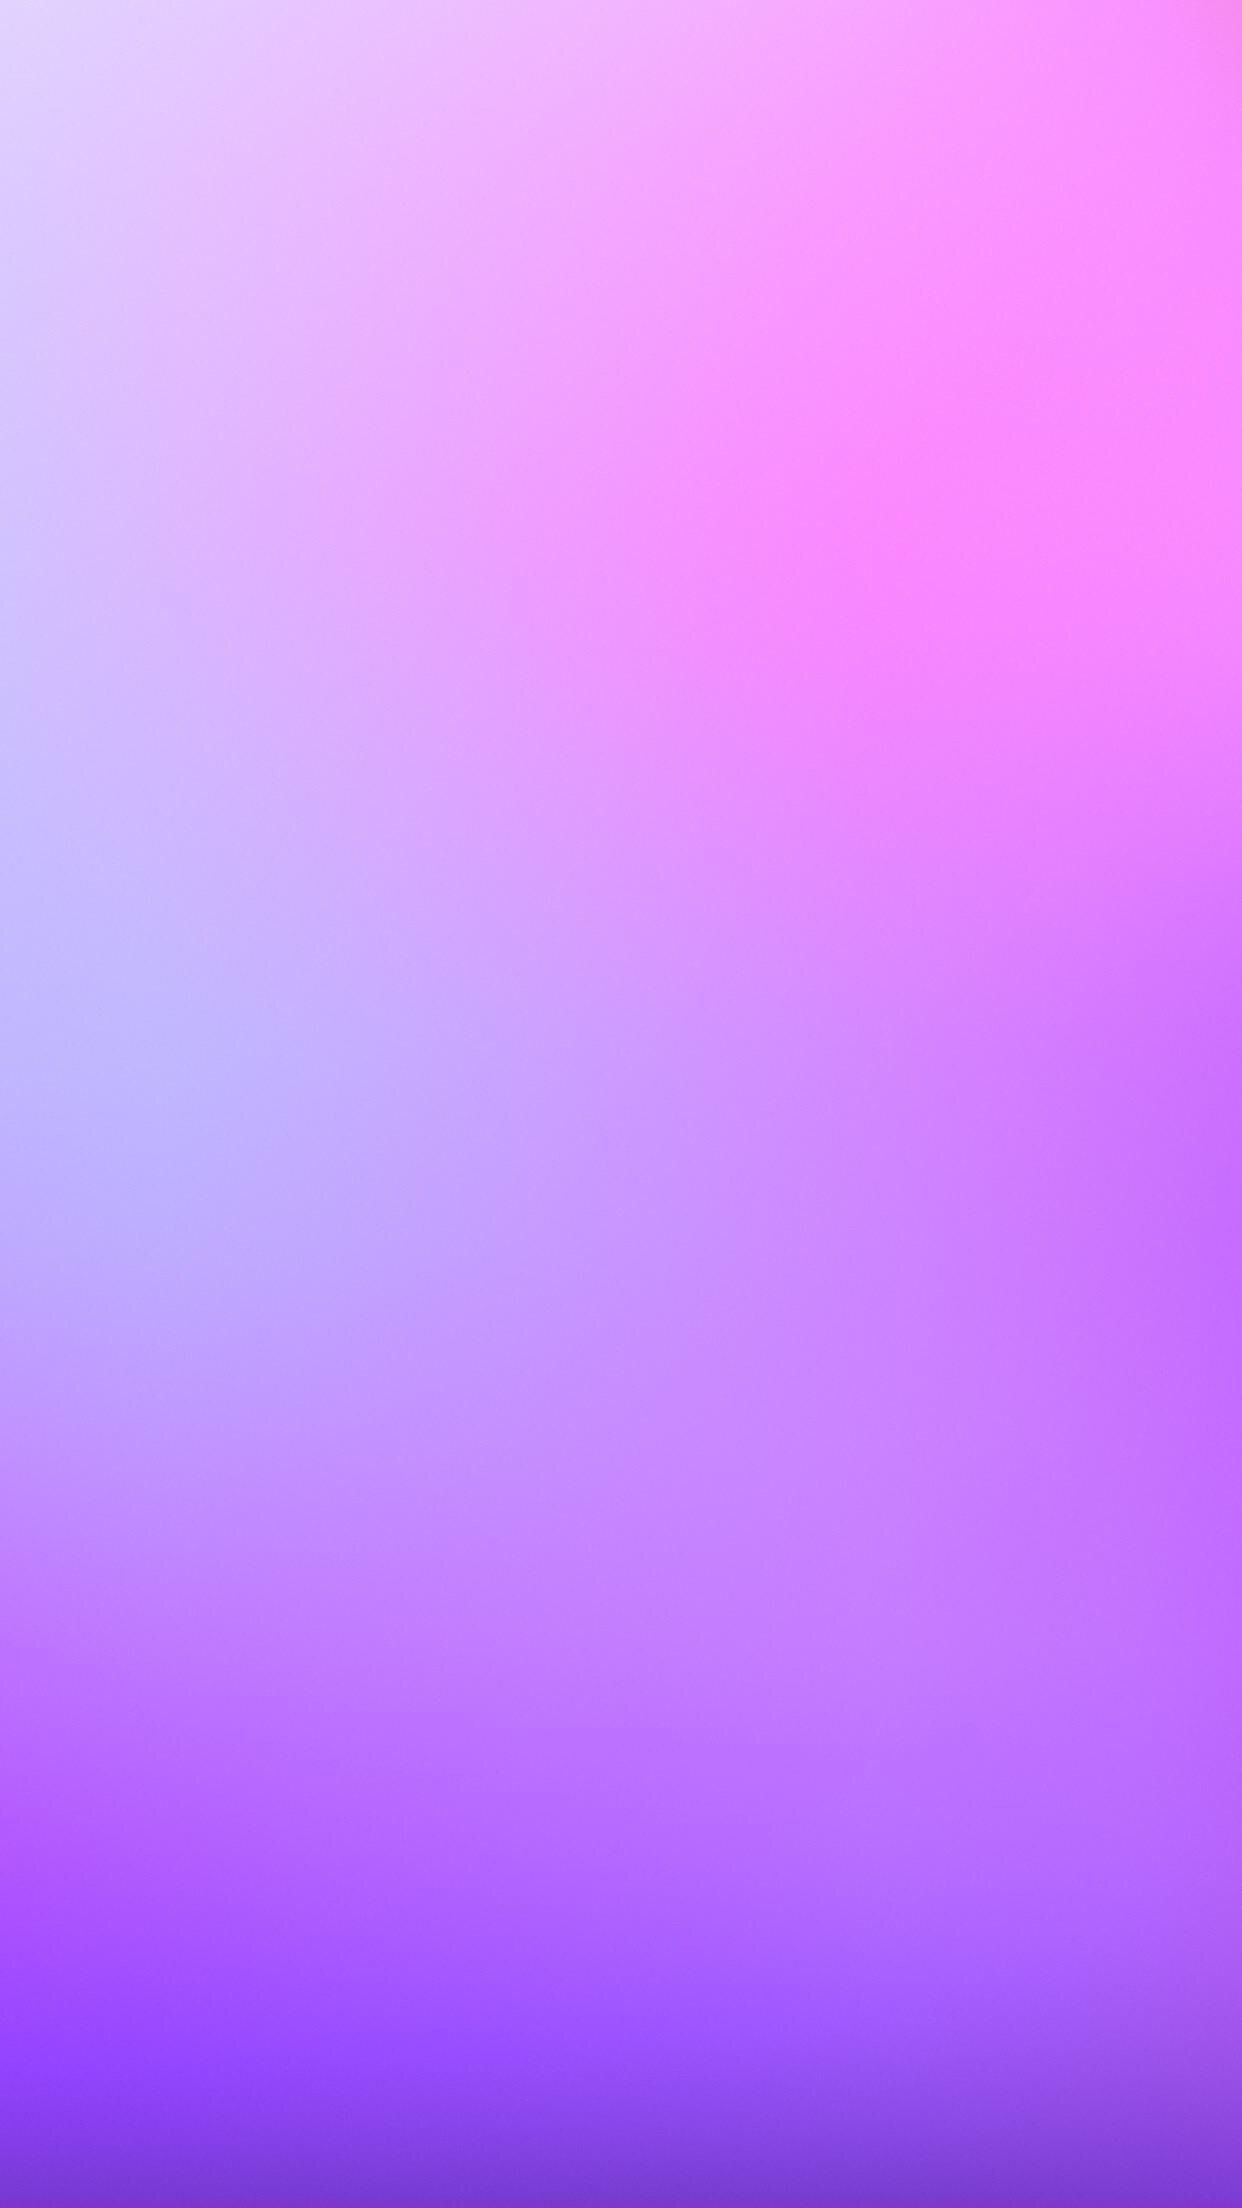 pink and purple wallpaper, violet, blue, purple, lilac, lavender, pink, sky, magenta